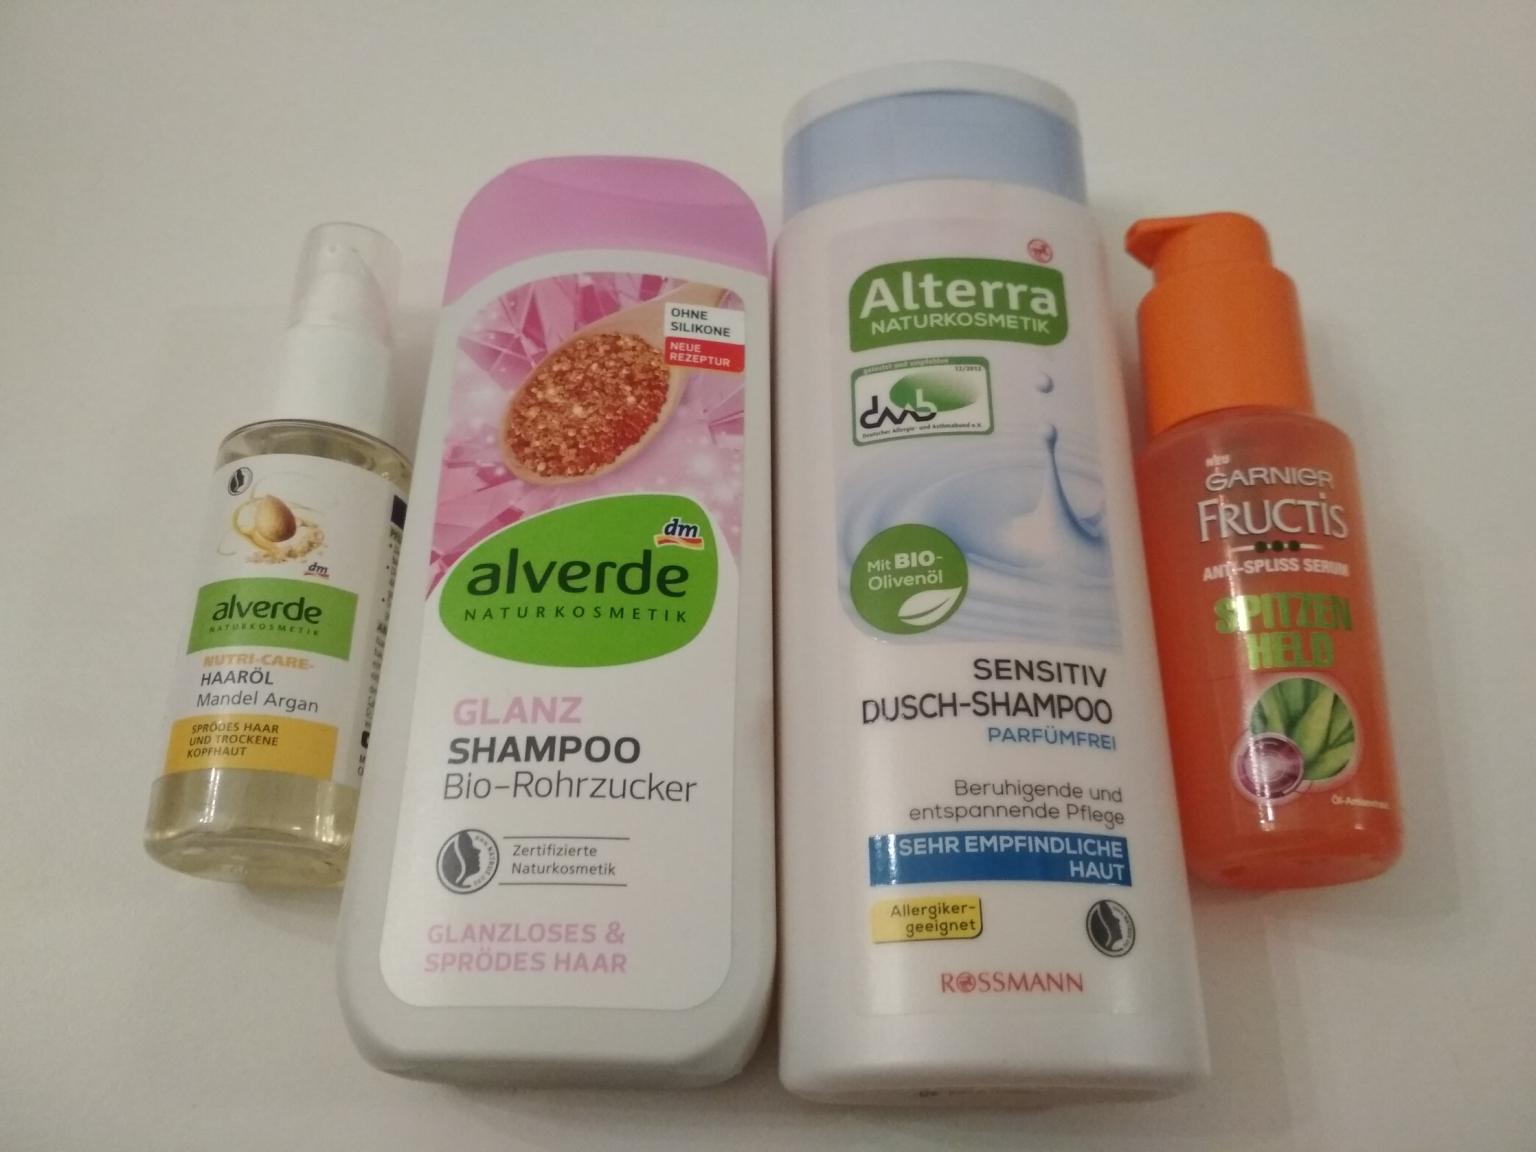 Haarpflege Set Alverde Alterra Shampoo Haarol In Dortmund For 3 00 For Sale Shpock